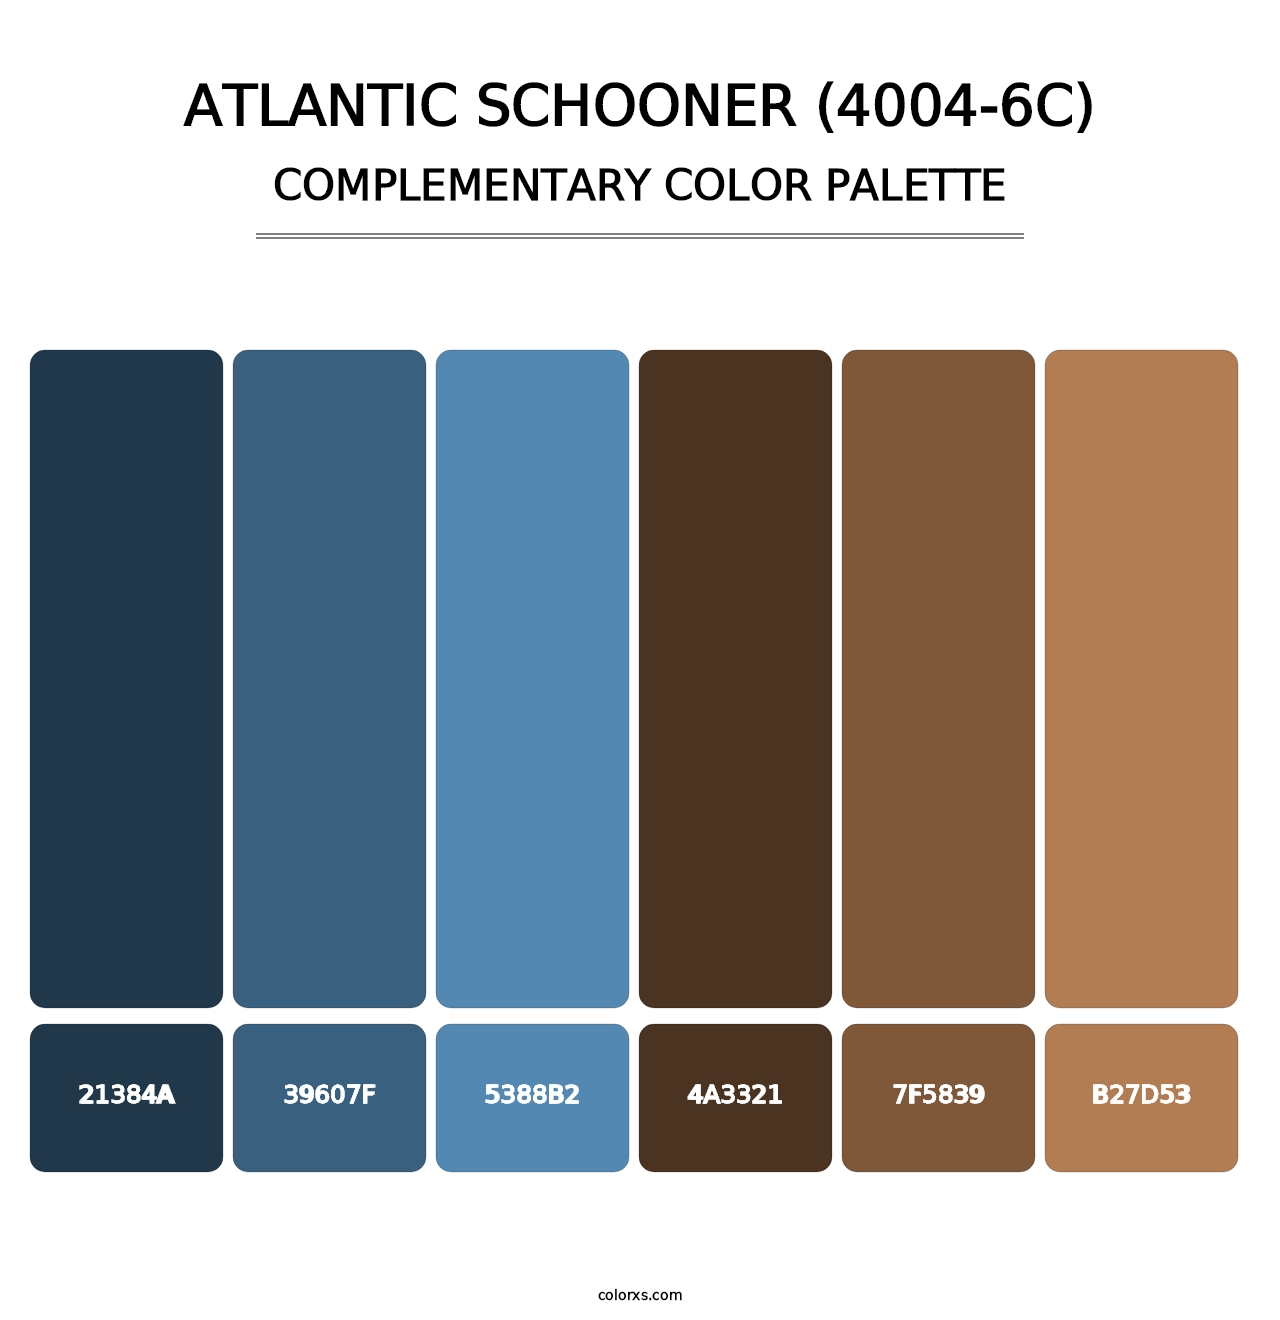 Atlantic Schooner (4004-6C) - Complementary Color Palette